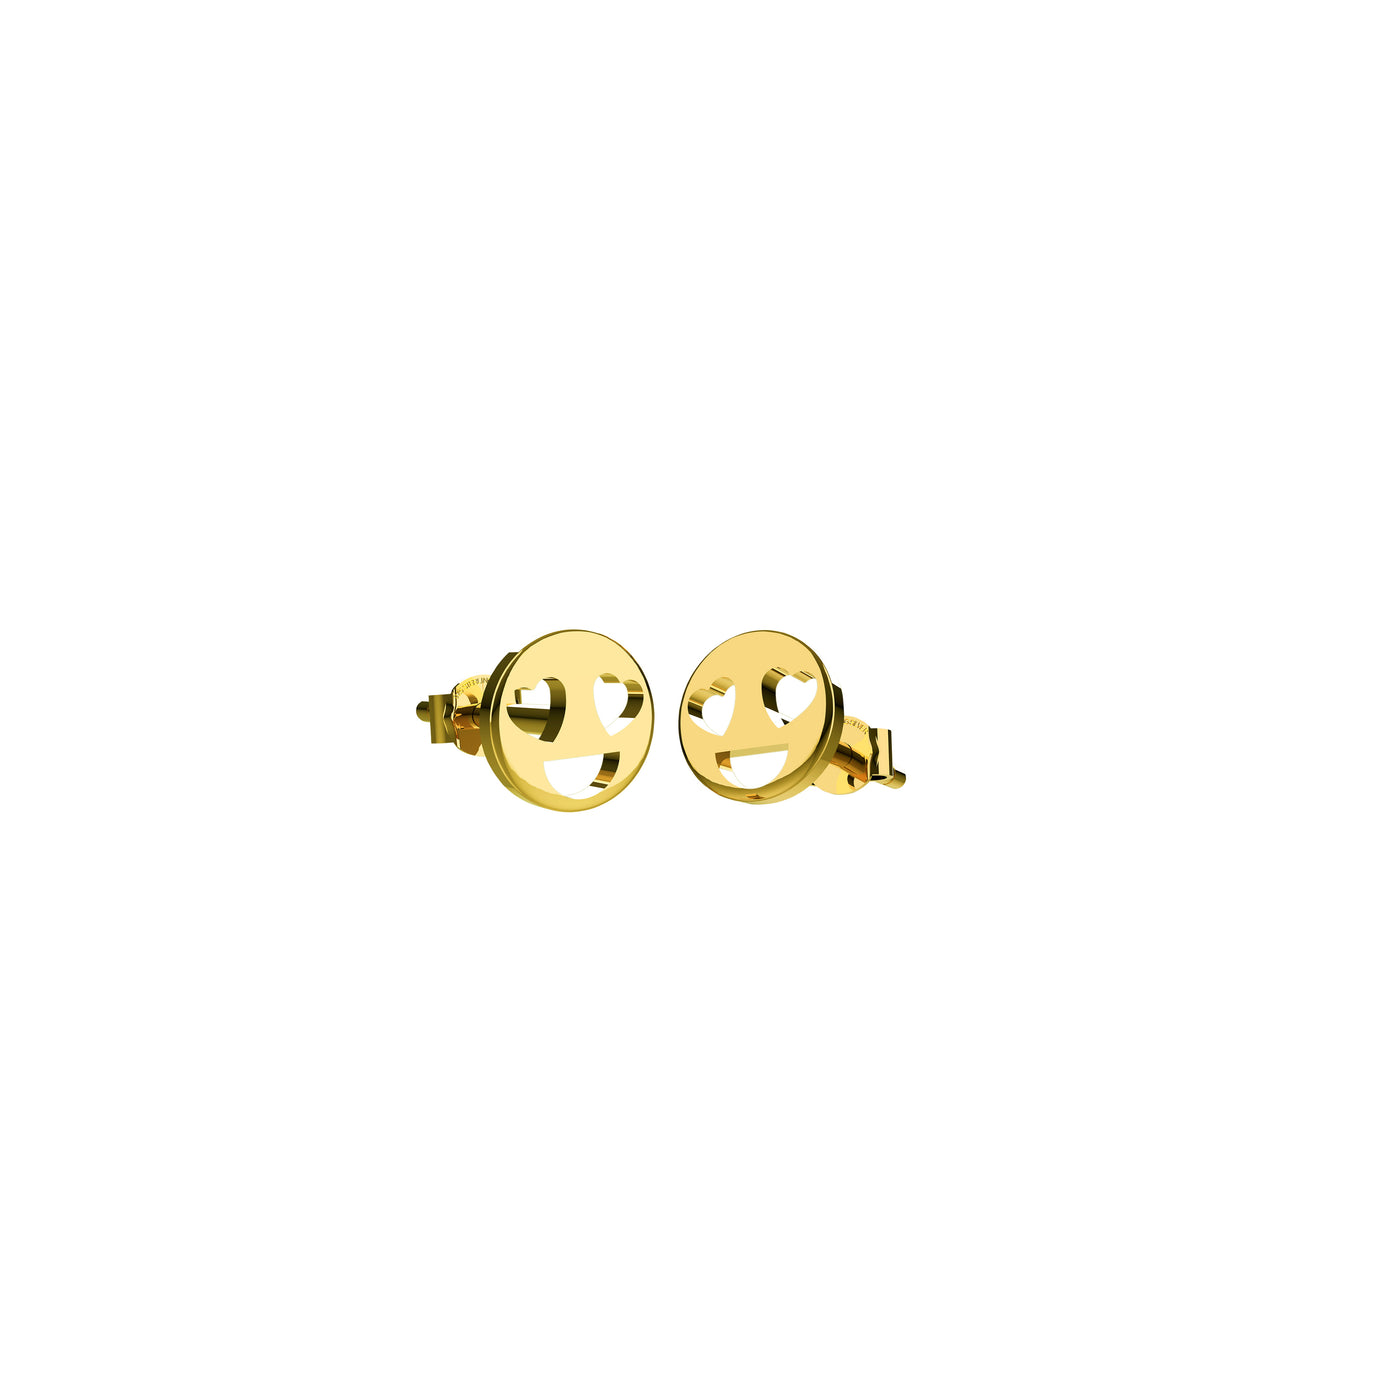 Tiny Heart Face Emoji Ear Stud